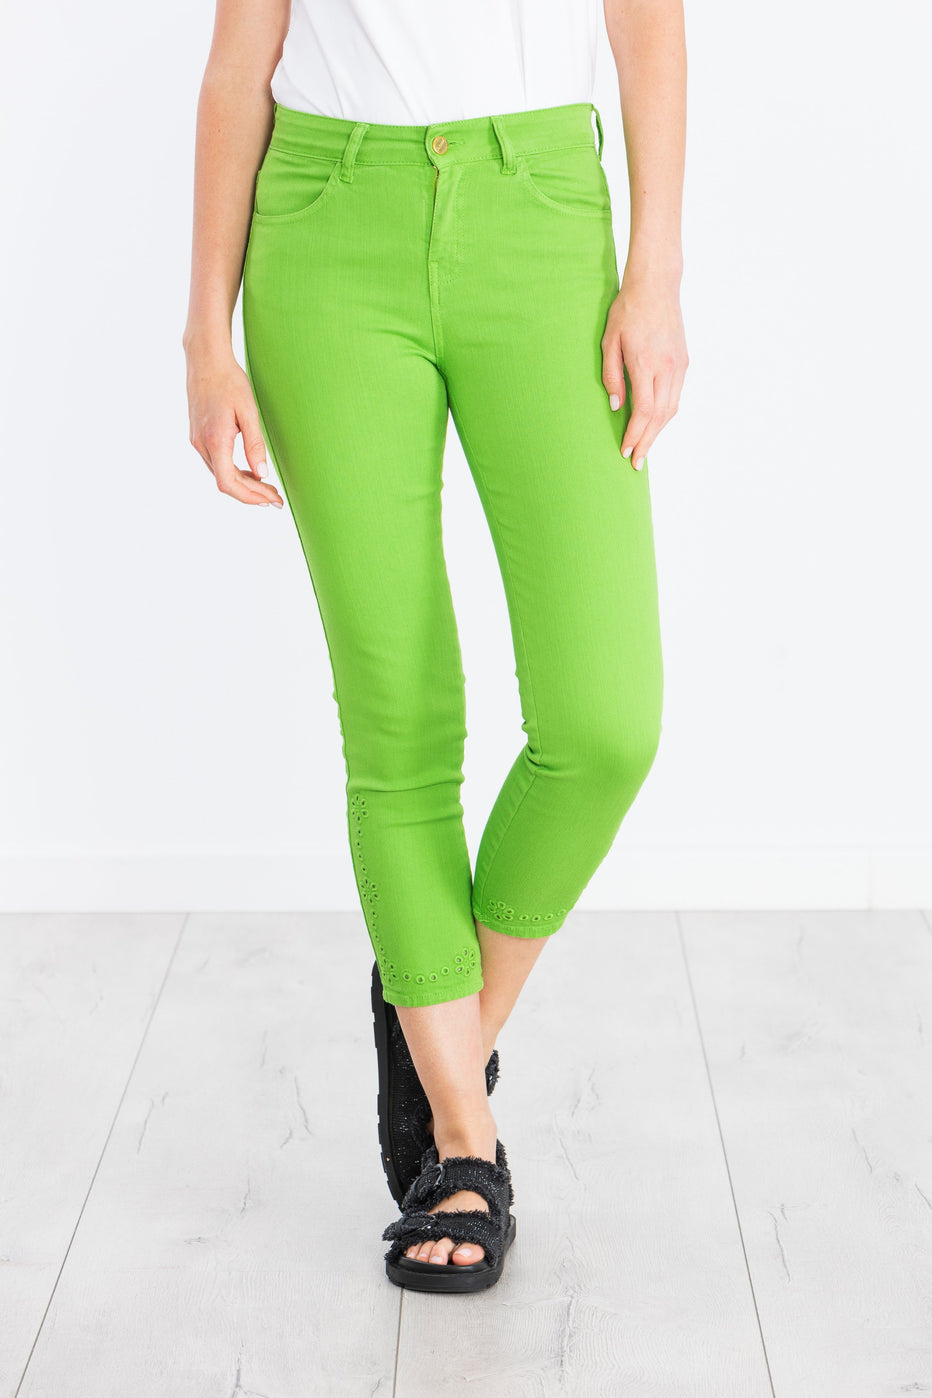 Pantalon verde pitillero cinco bolsillos con bordado LolitasyL - lolitasyl.com